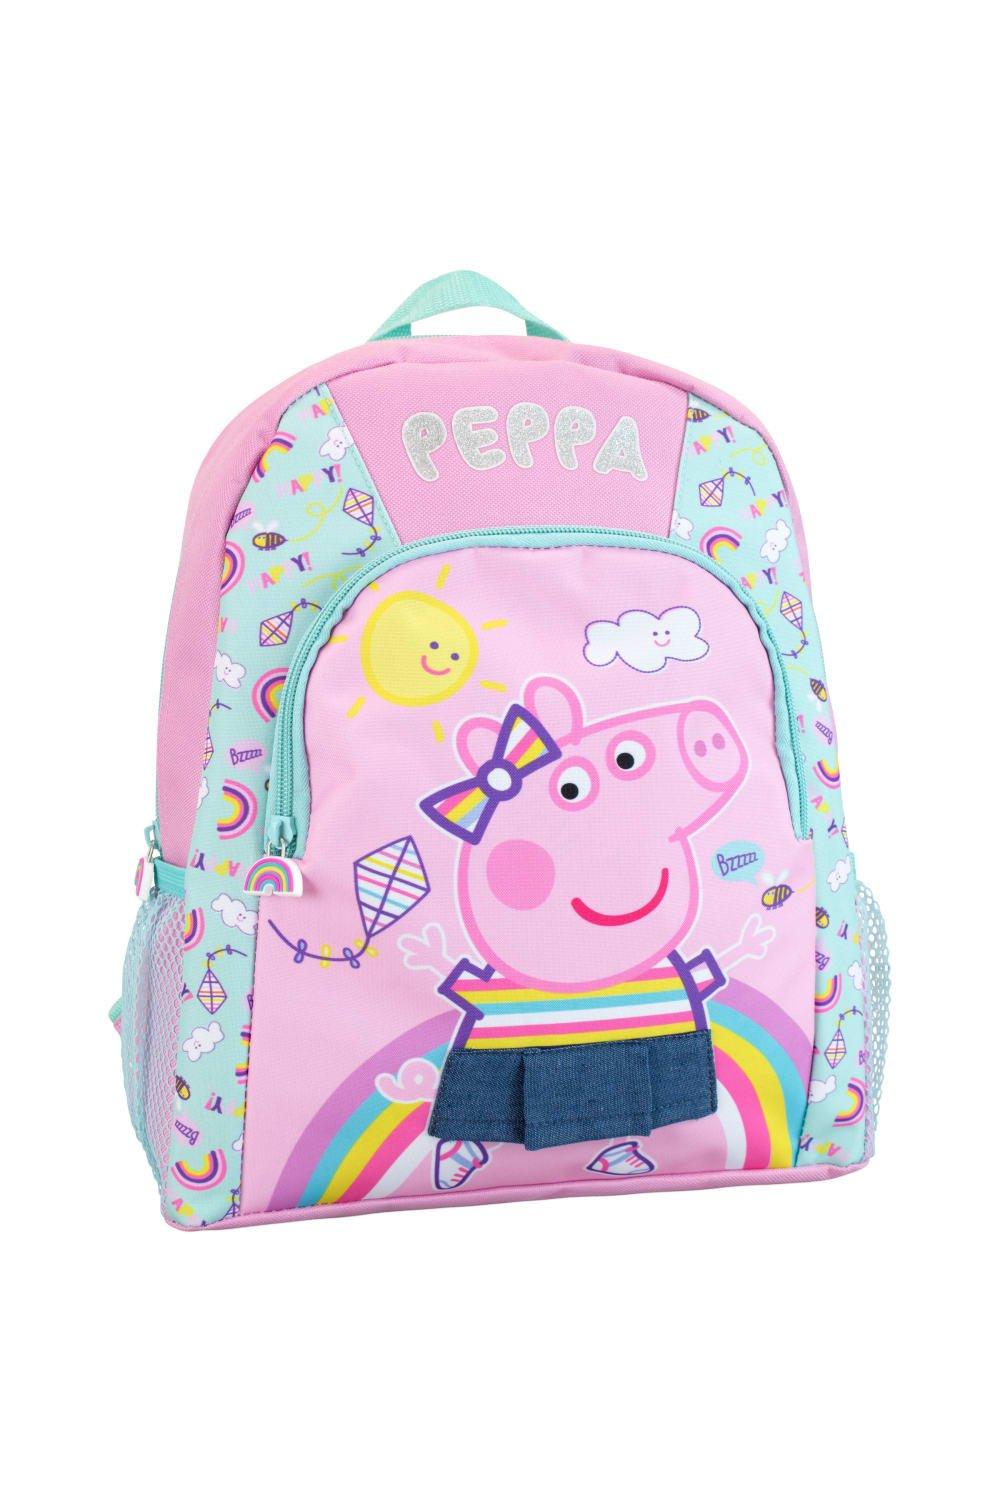 Детский рюкзак Peppa Pig, розовый sweet box конфитрейд свинка пеппа с игрушкой 10 г